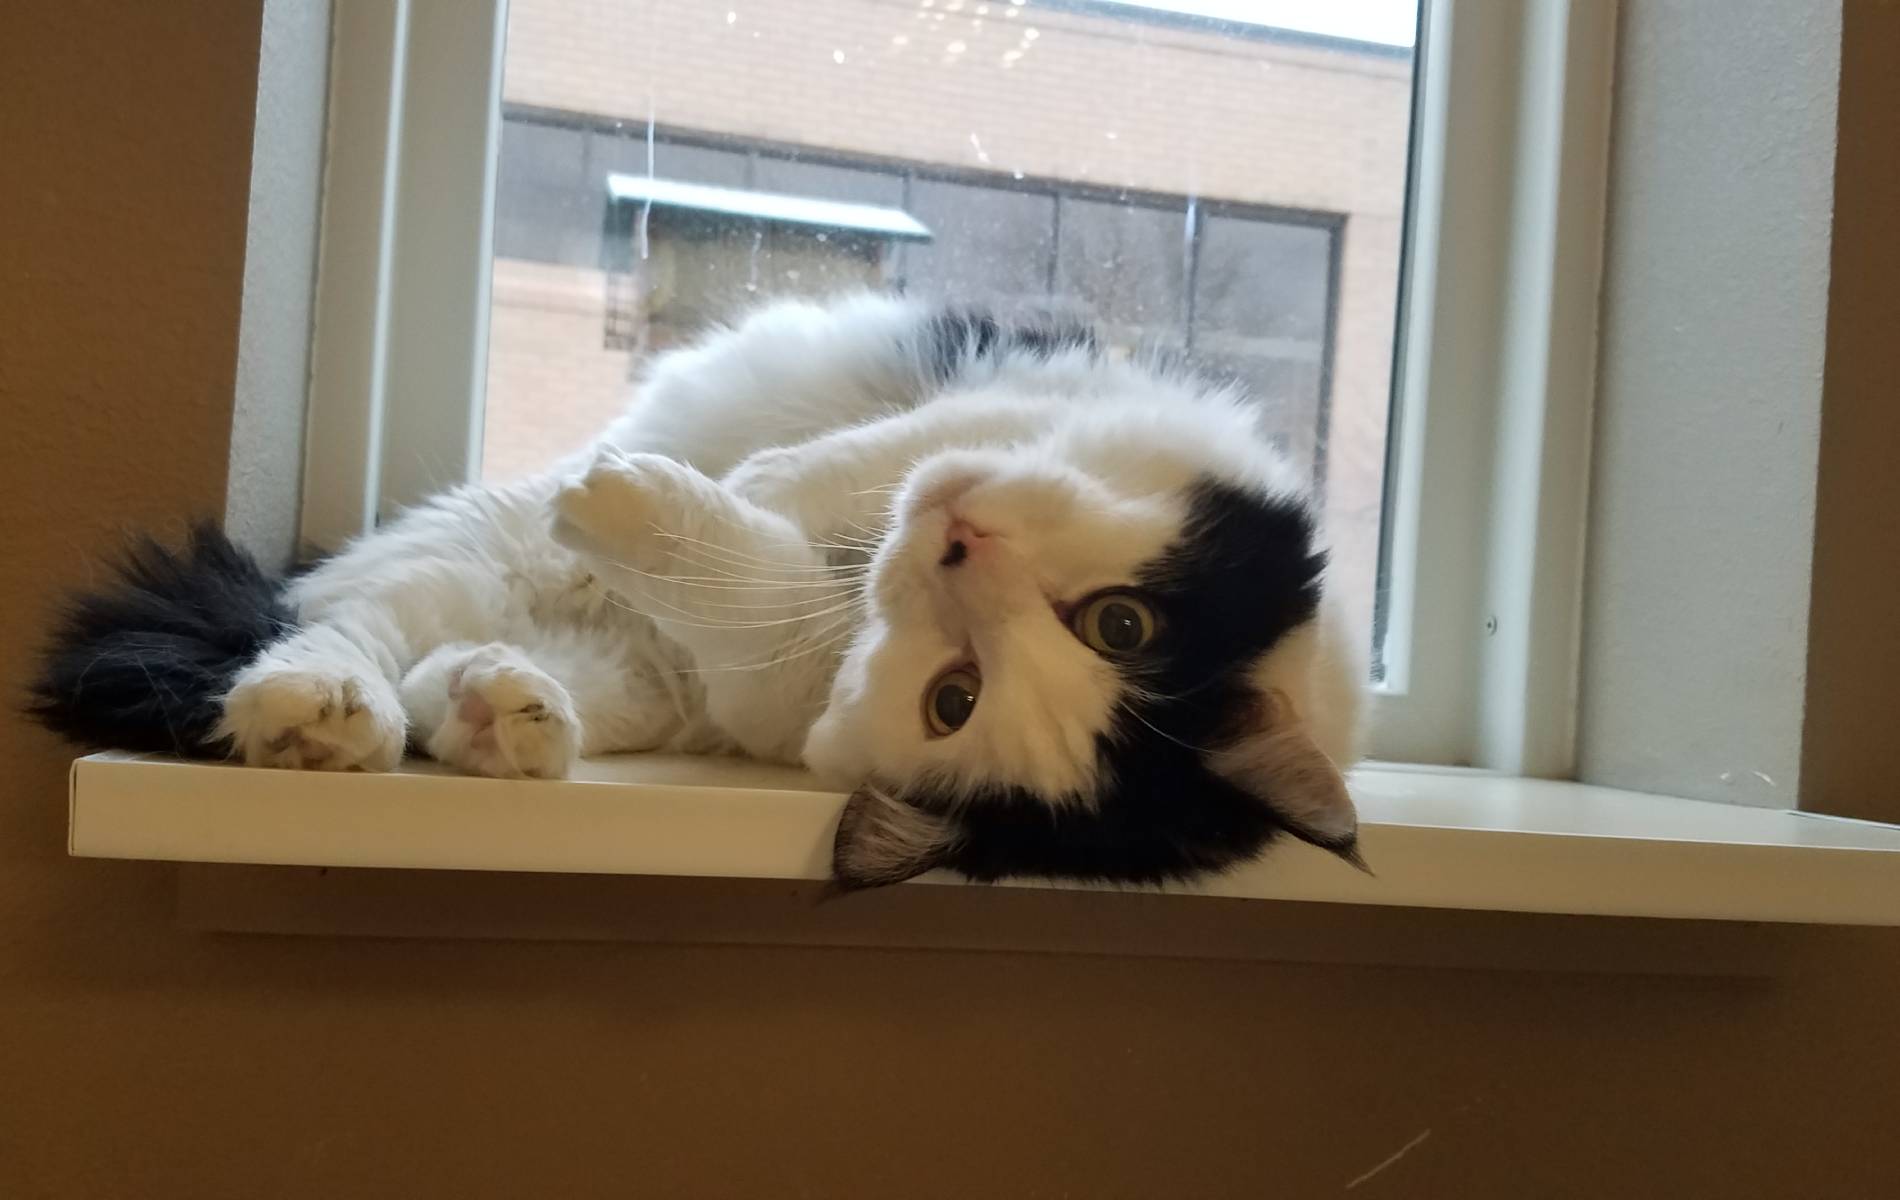 A cat lying on a window sill